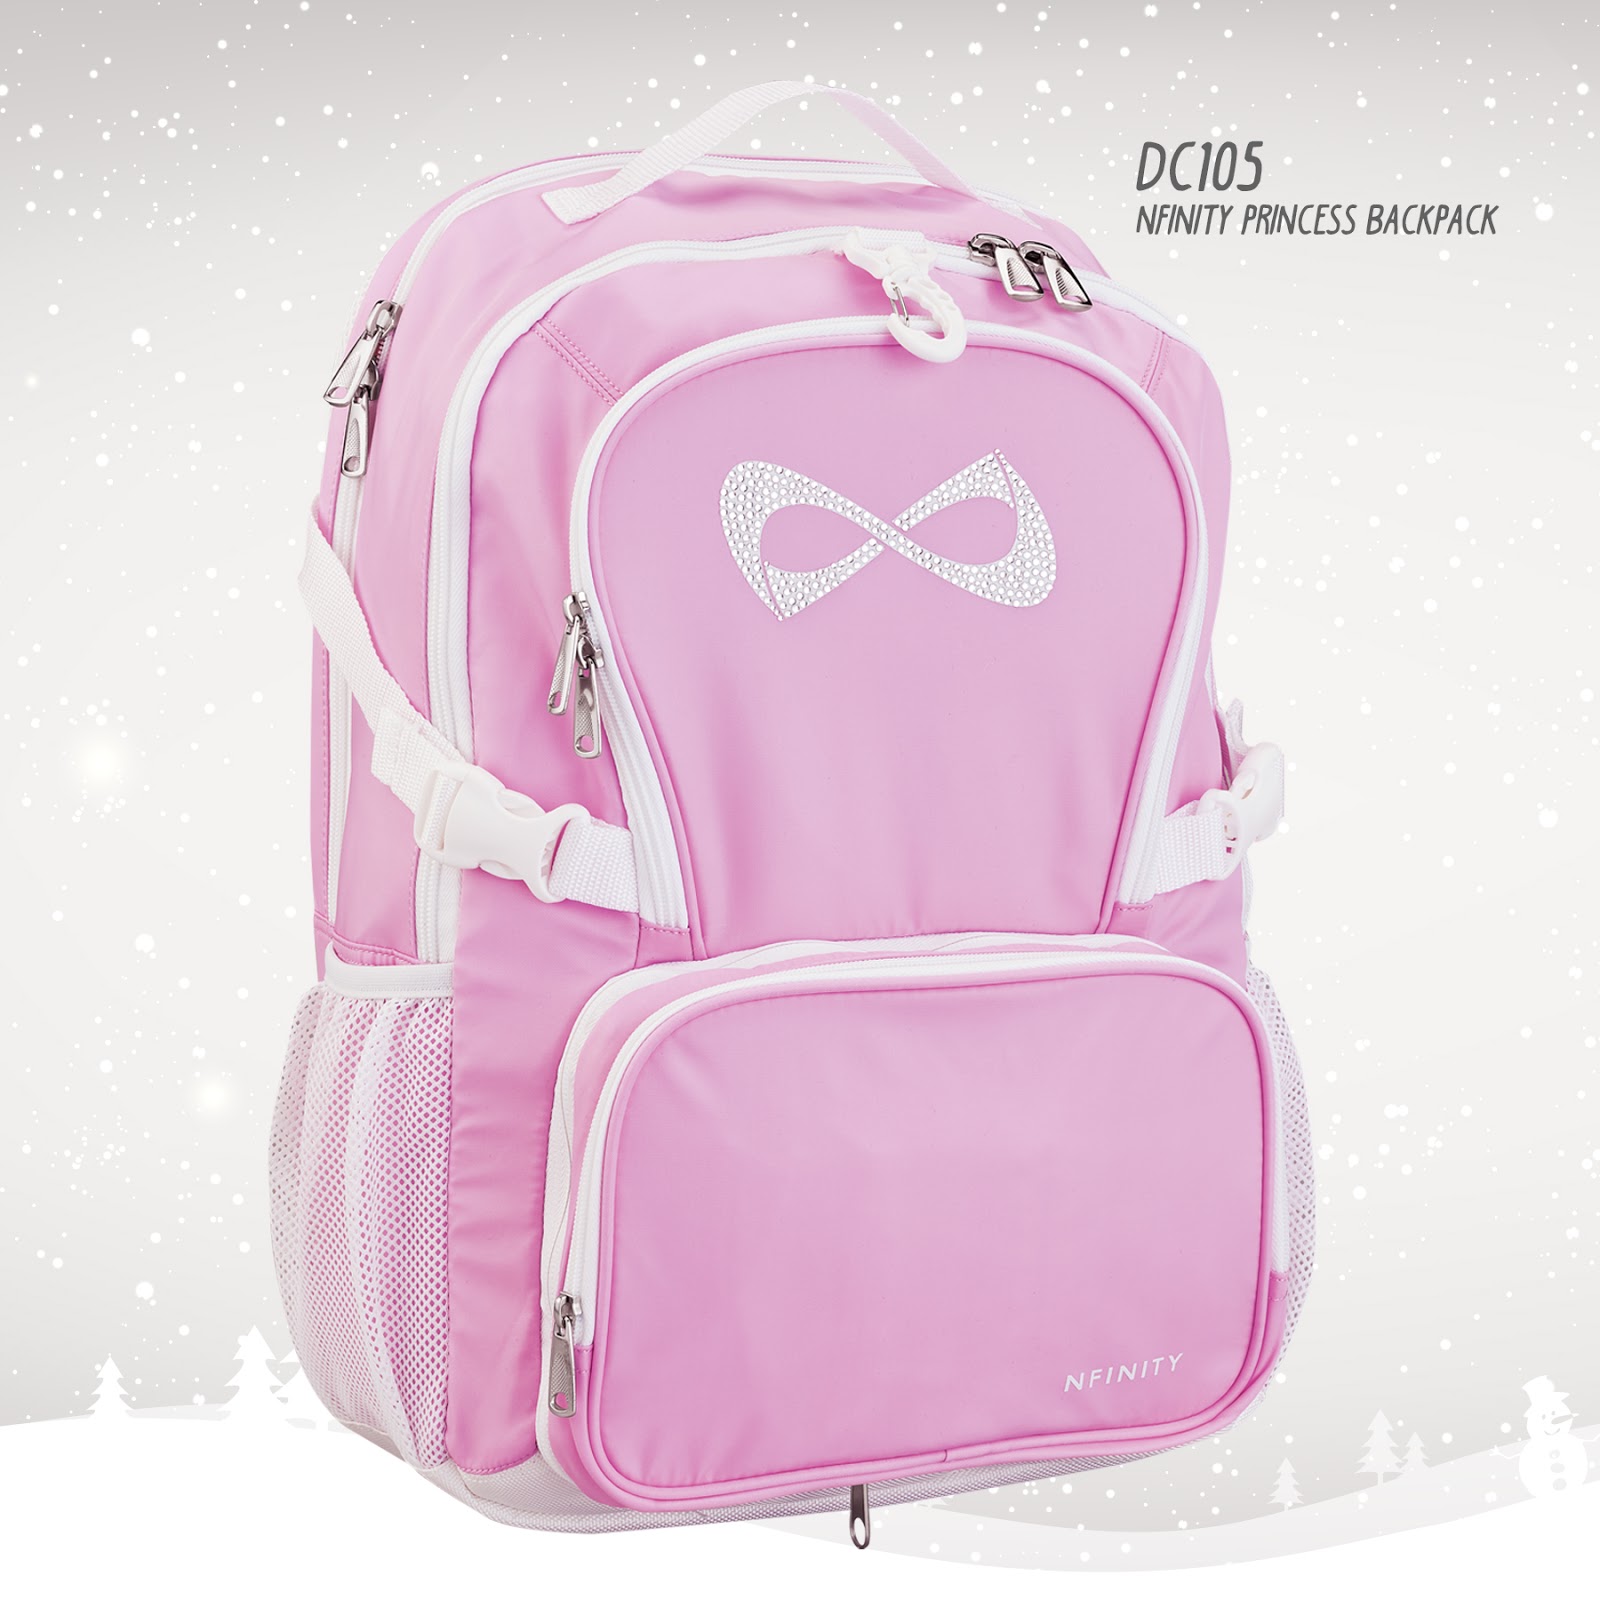 Nfinity Princess Backpack